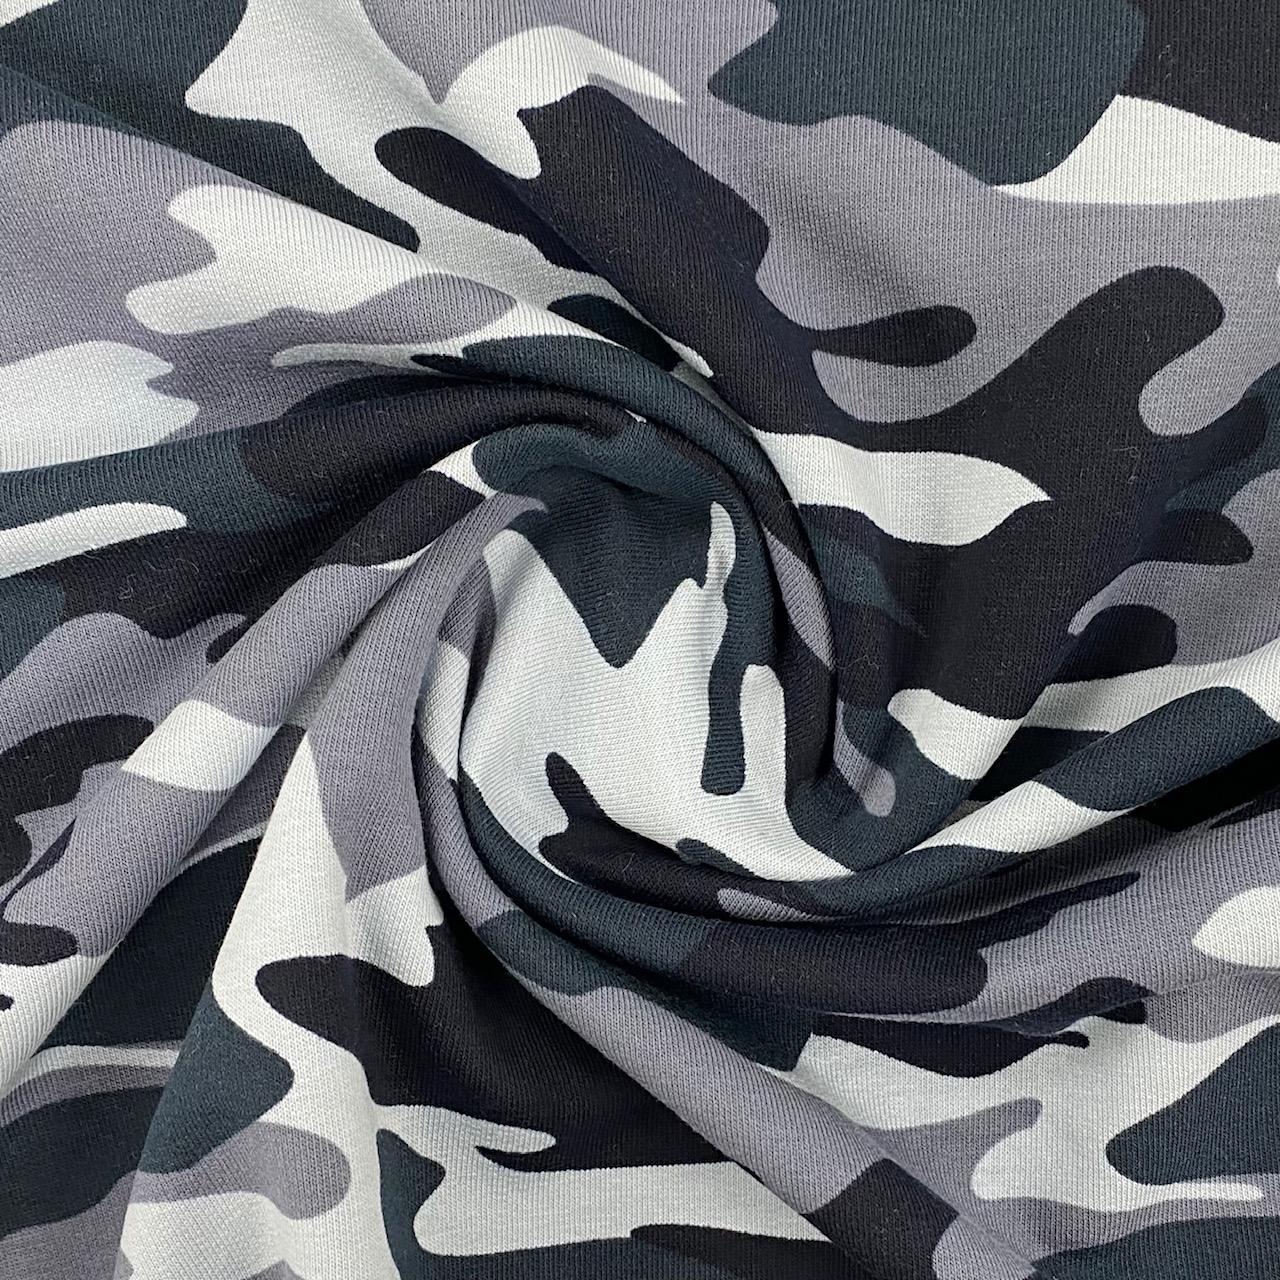 Sweat French Terry, angeraut, Camouflage dunkelgrün/grau.  Art. 4979-1701